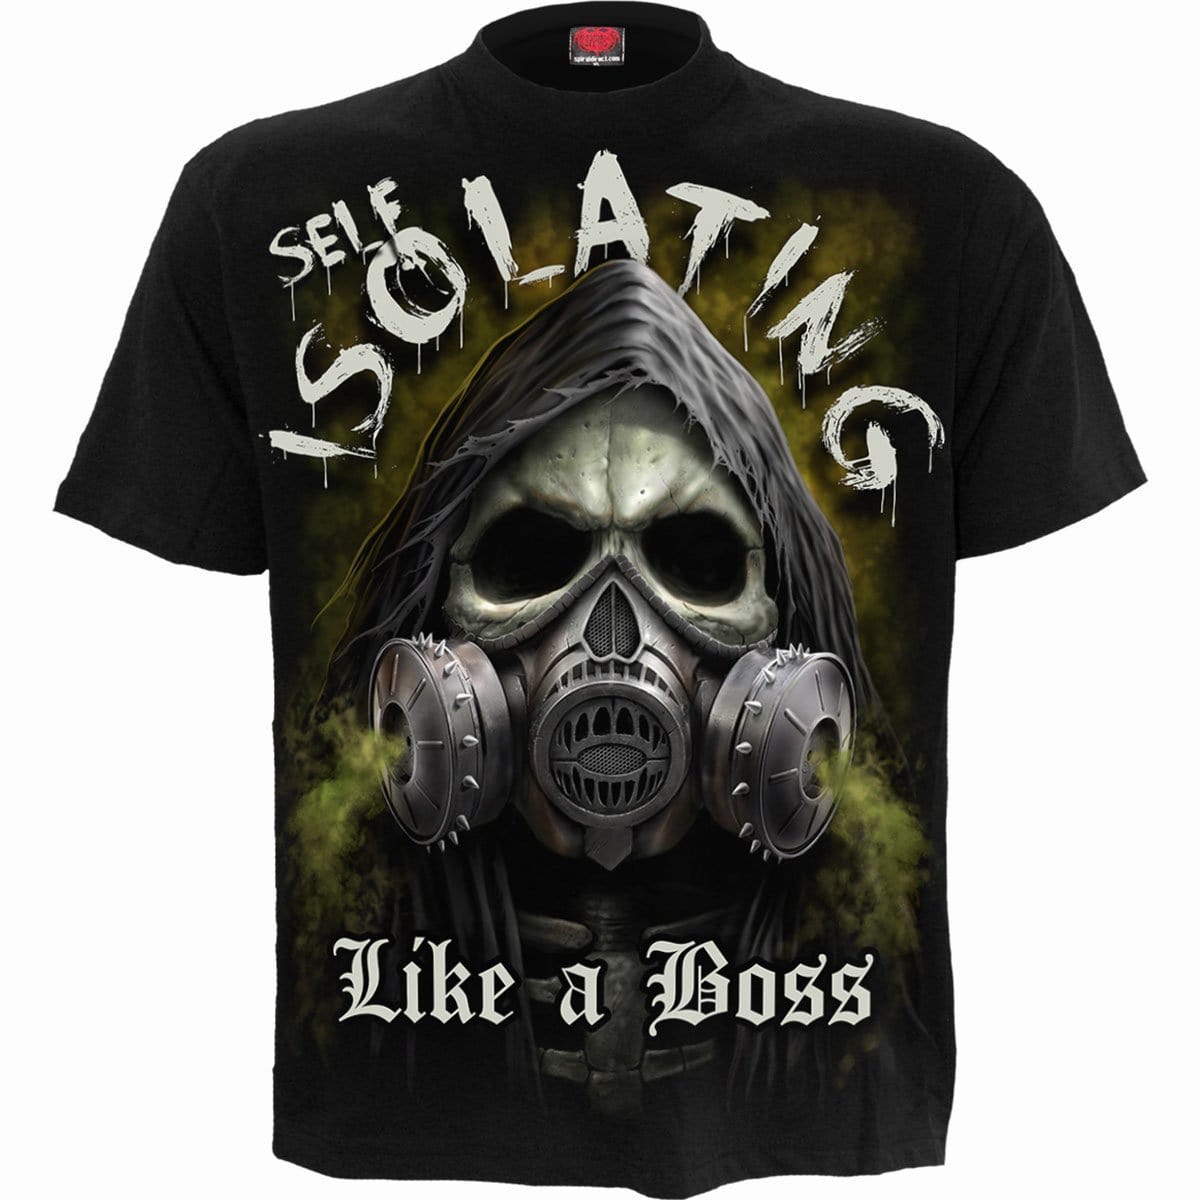 SELF ISOLATION - T-Shirt Black - Spiral USA